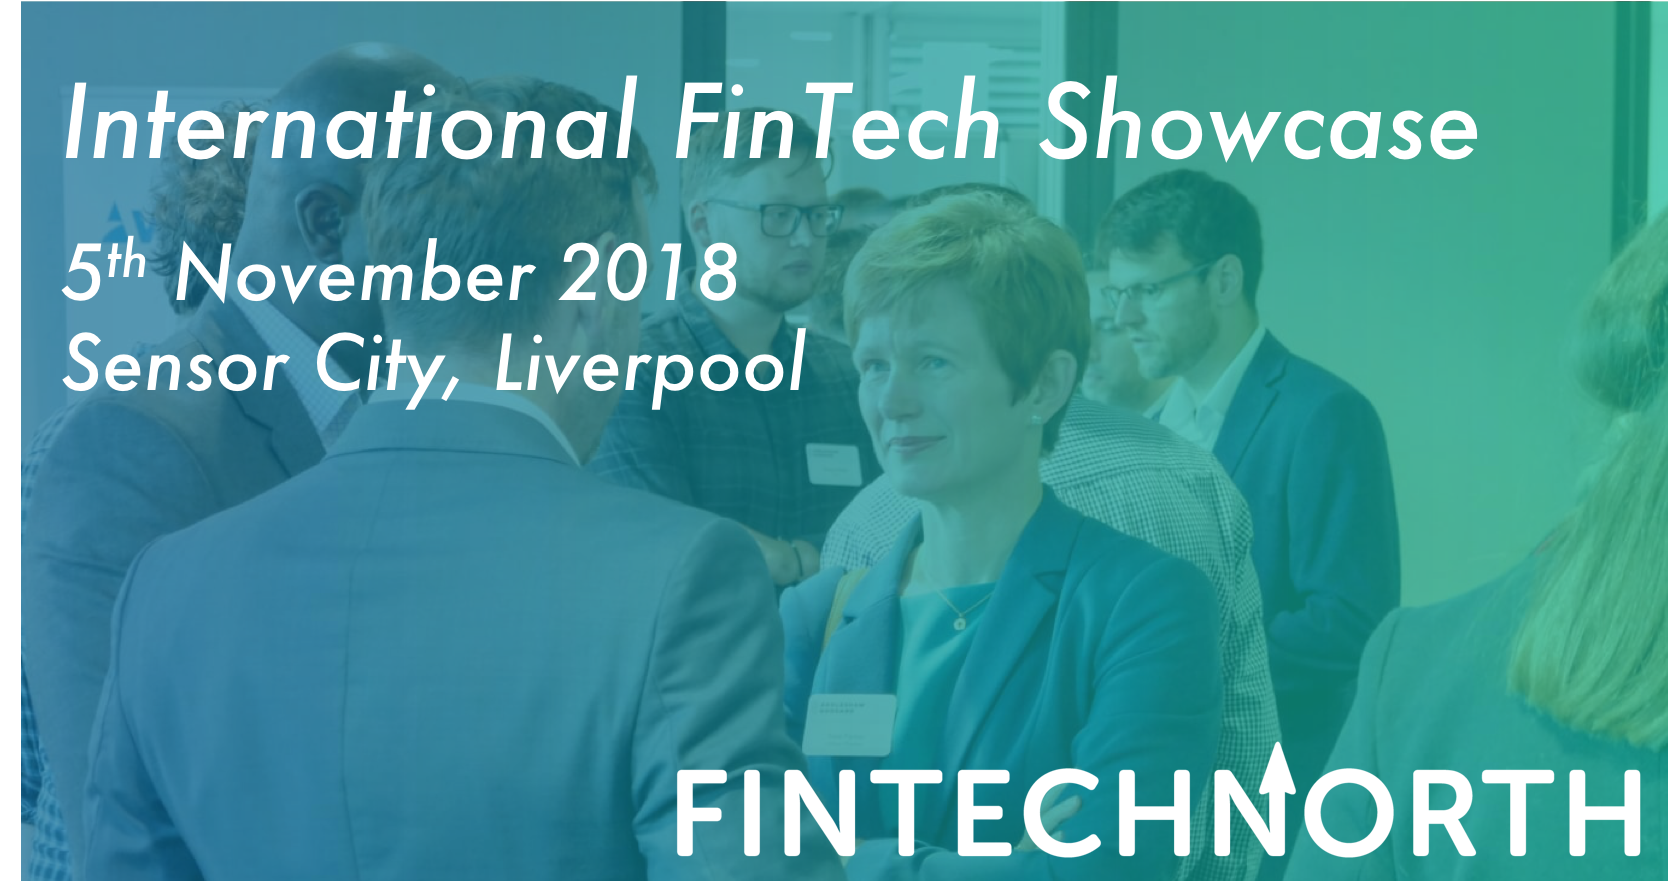 International FinTech Showcase Liverpool: Agenda